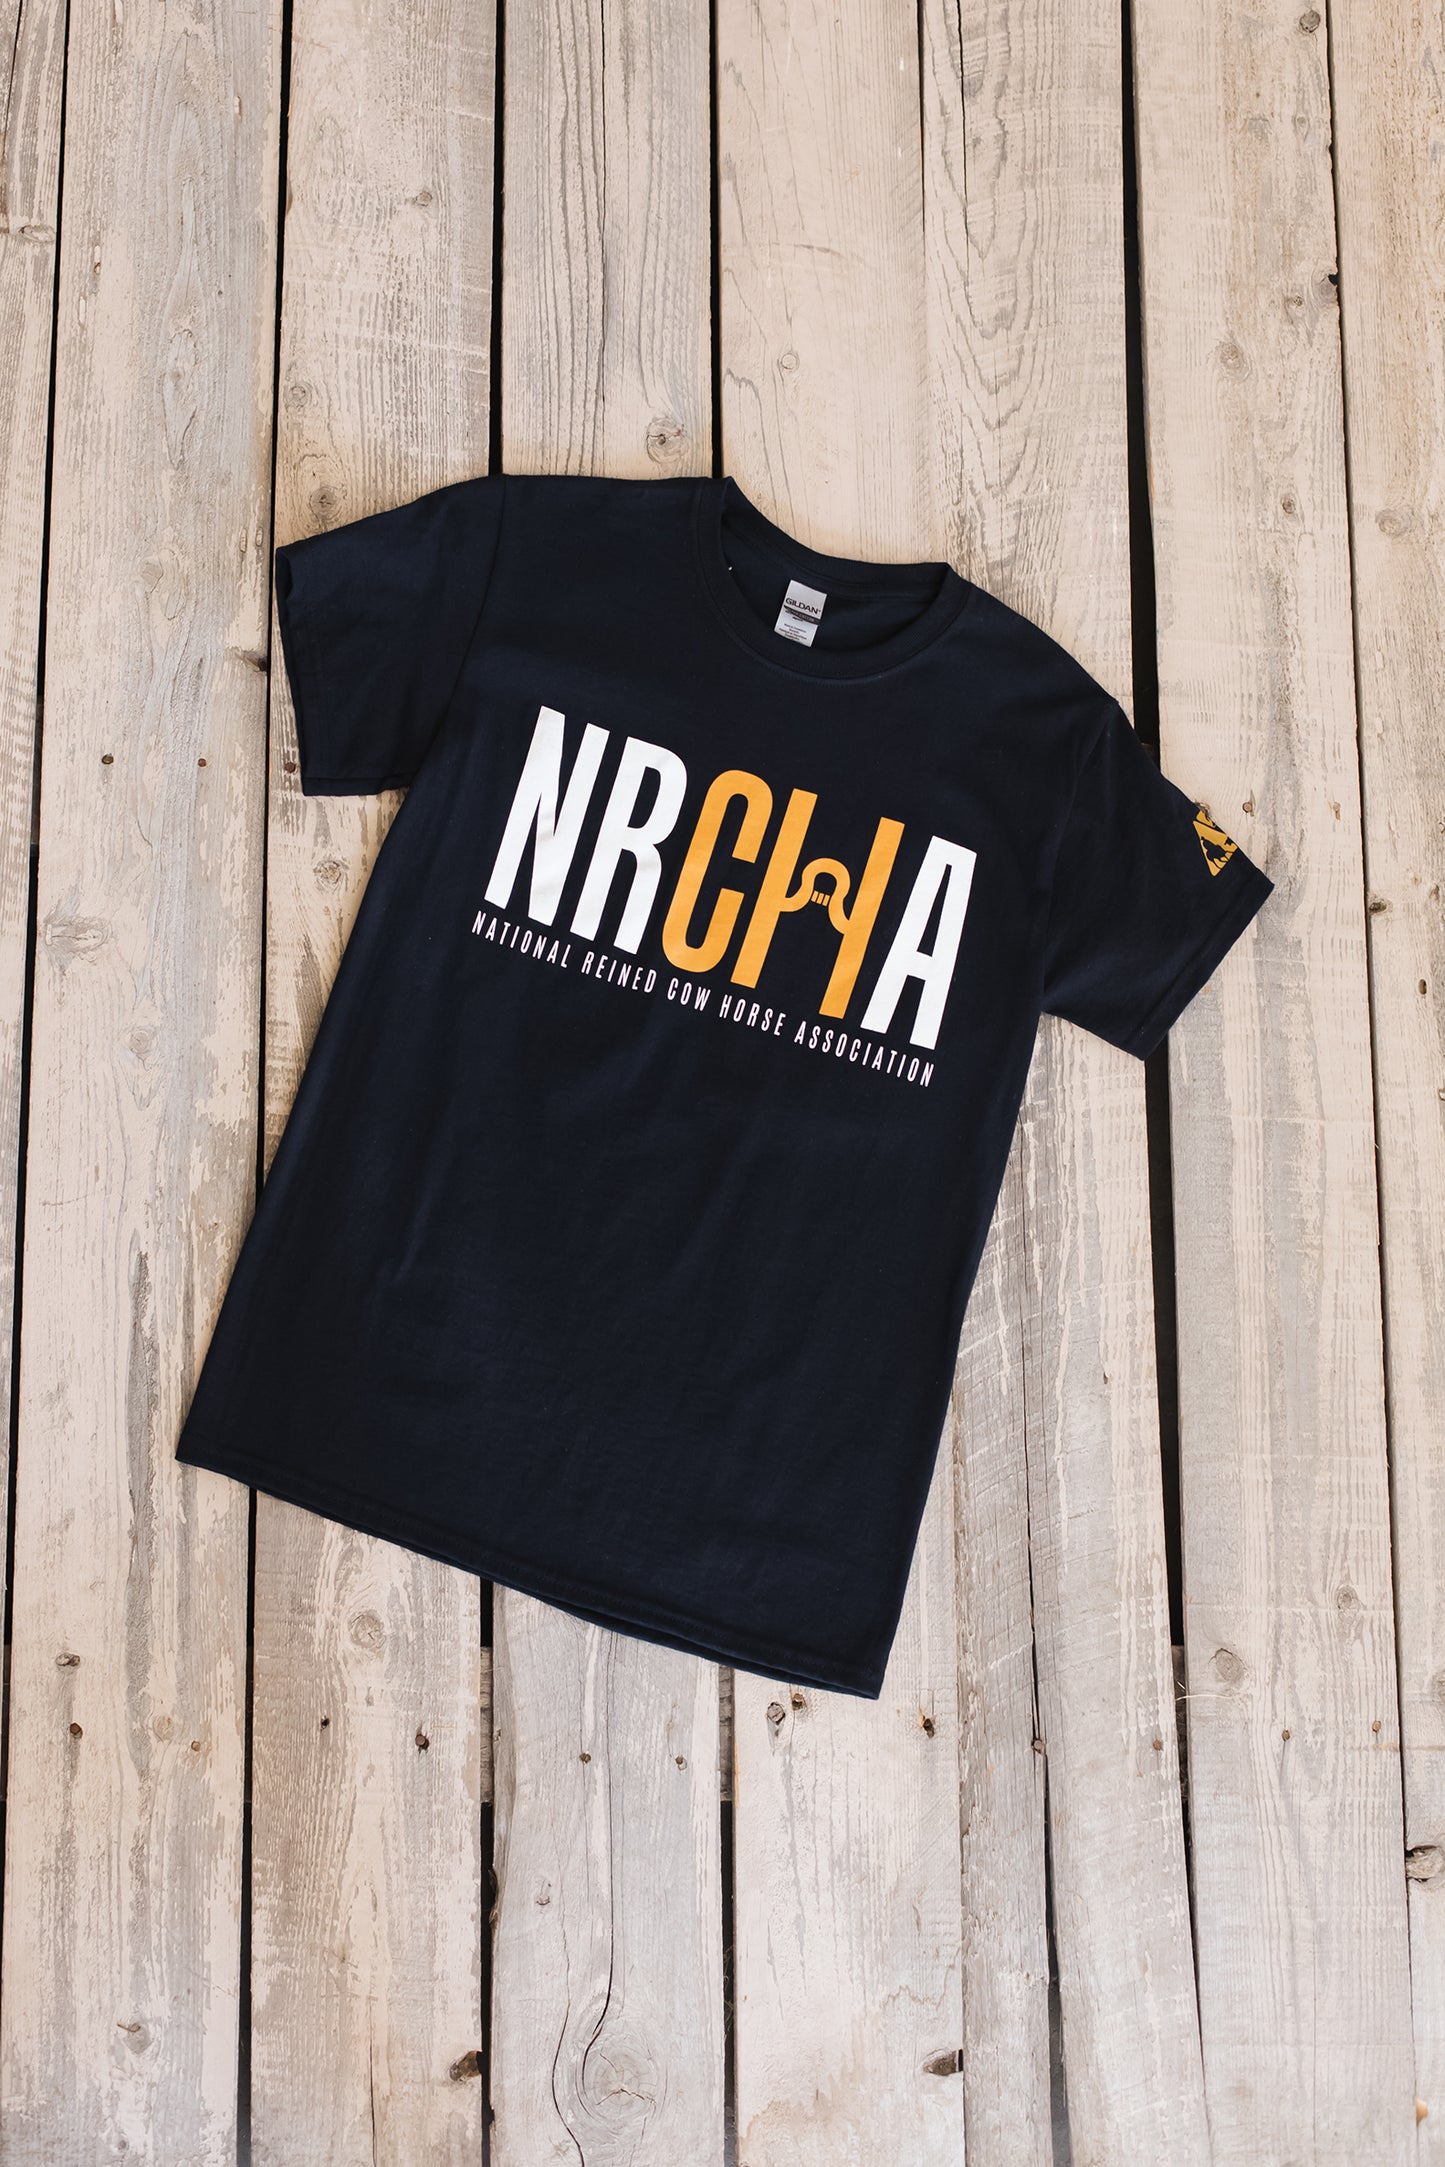 Men's NRCHA Logo Classic Black Short Sleeve Tee